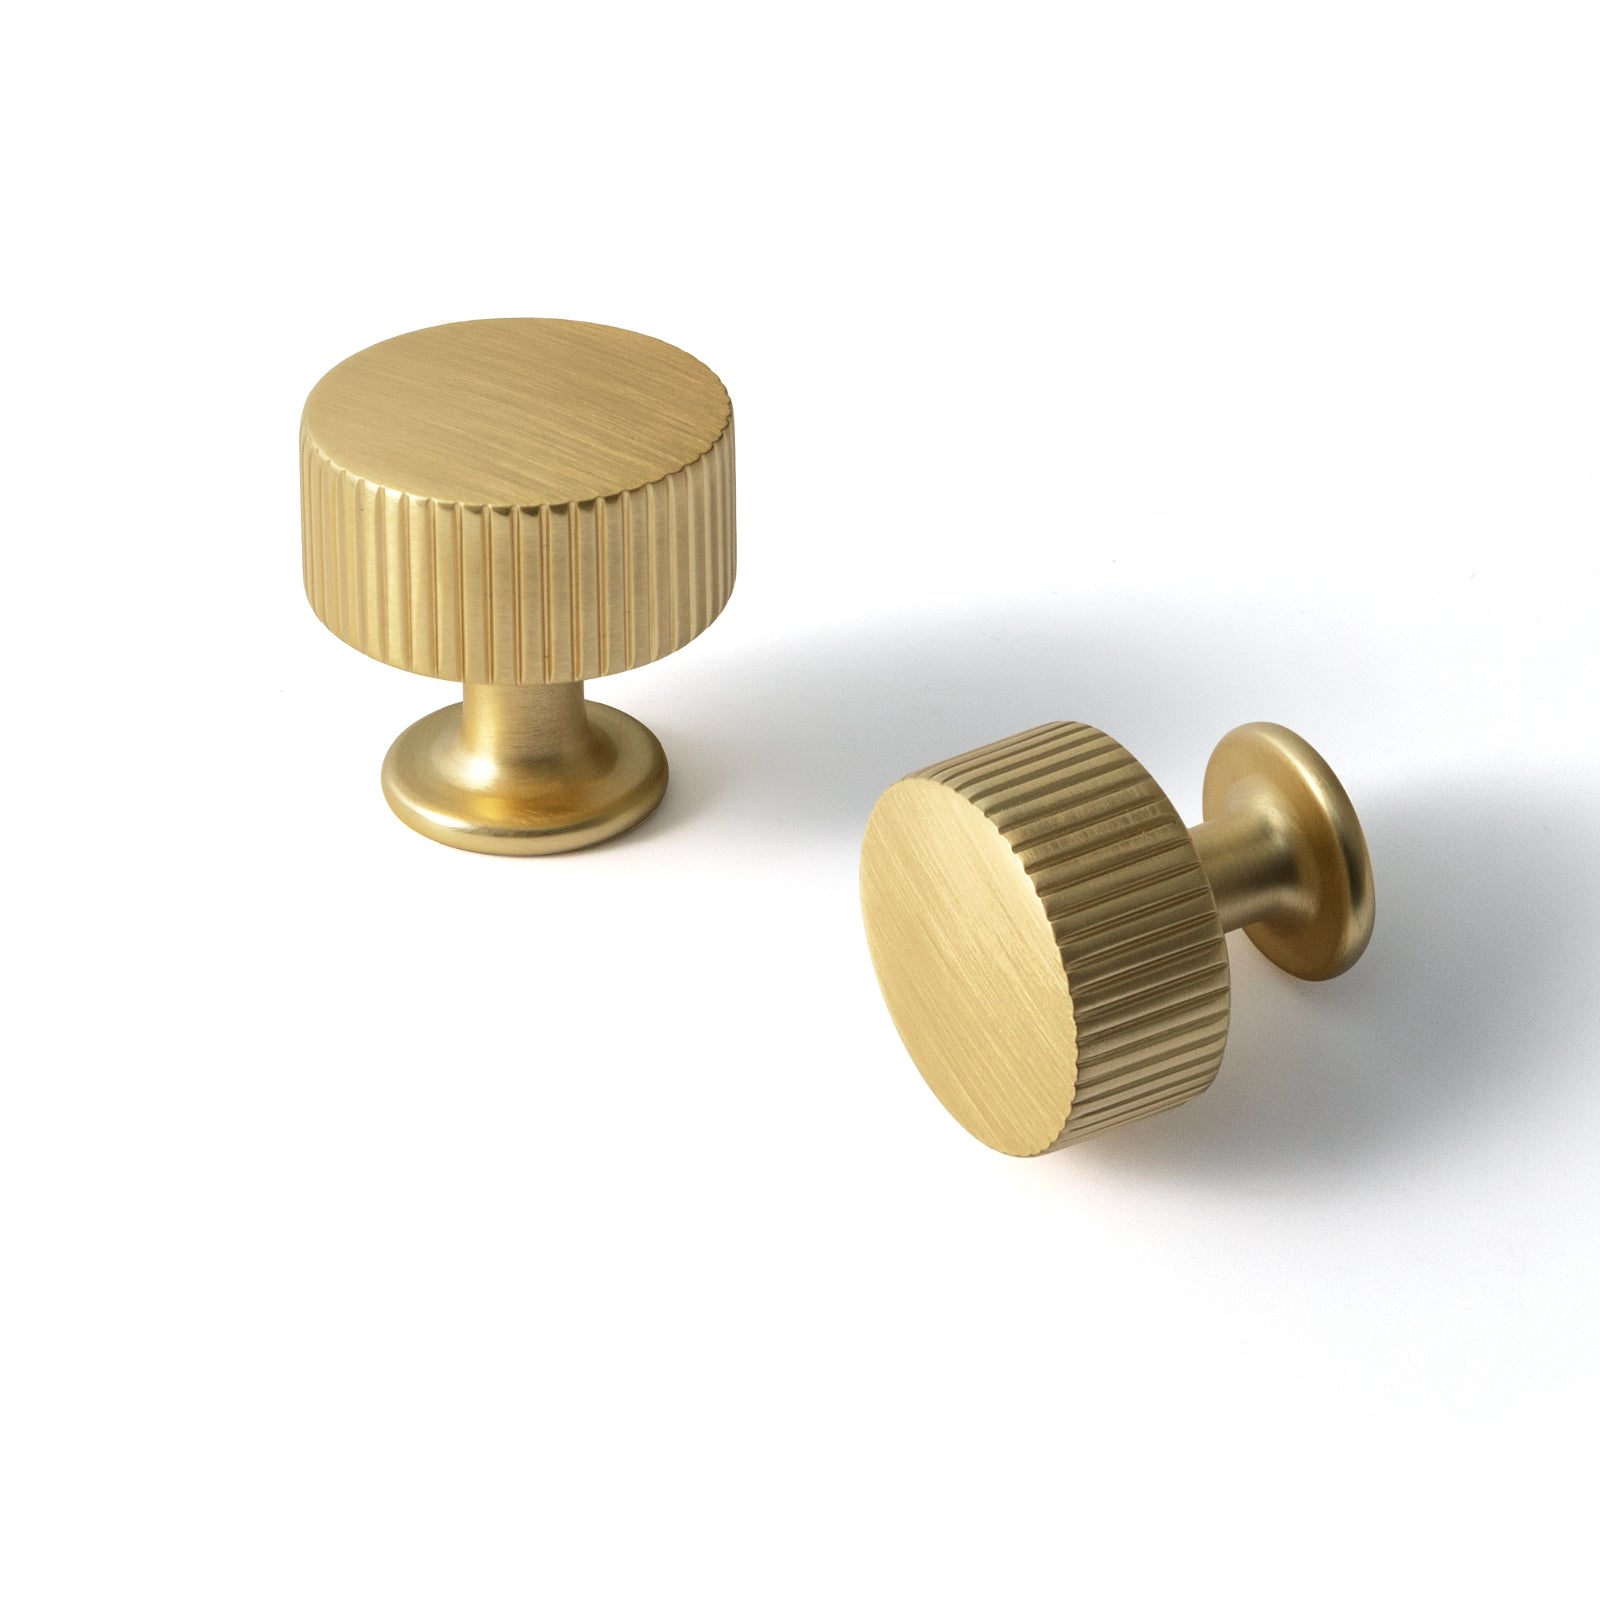 Goo-Ki Brushed Brass / Knob / 6 Pack Striped Decorations Cabinet Pull Retro Brass Cabinet Handles